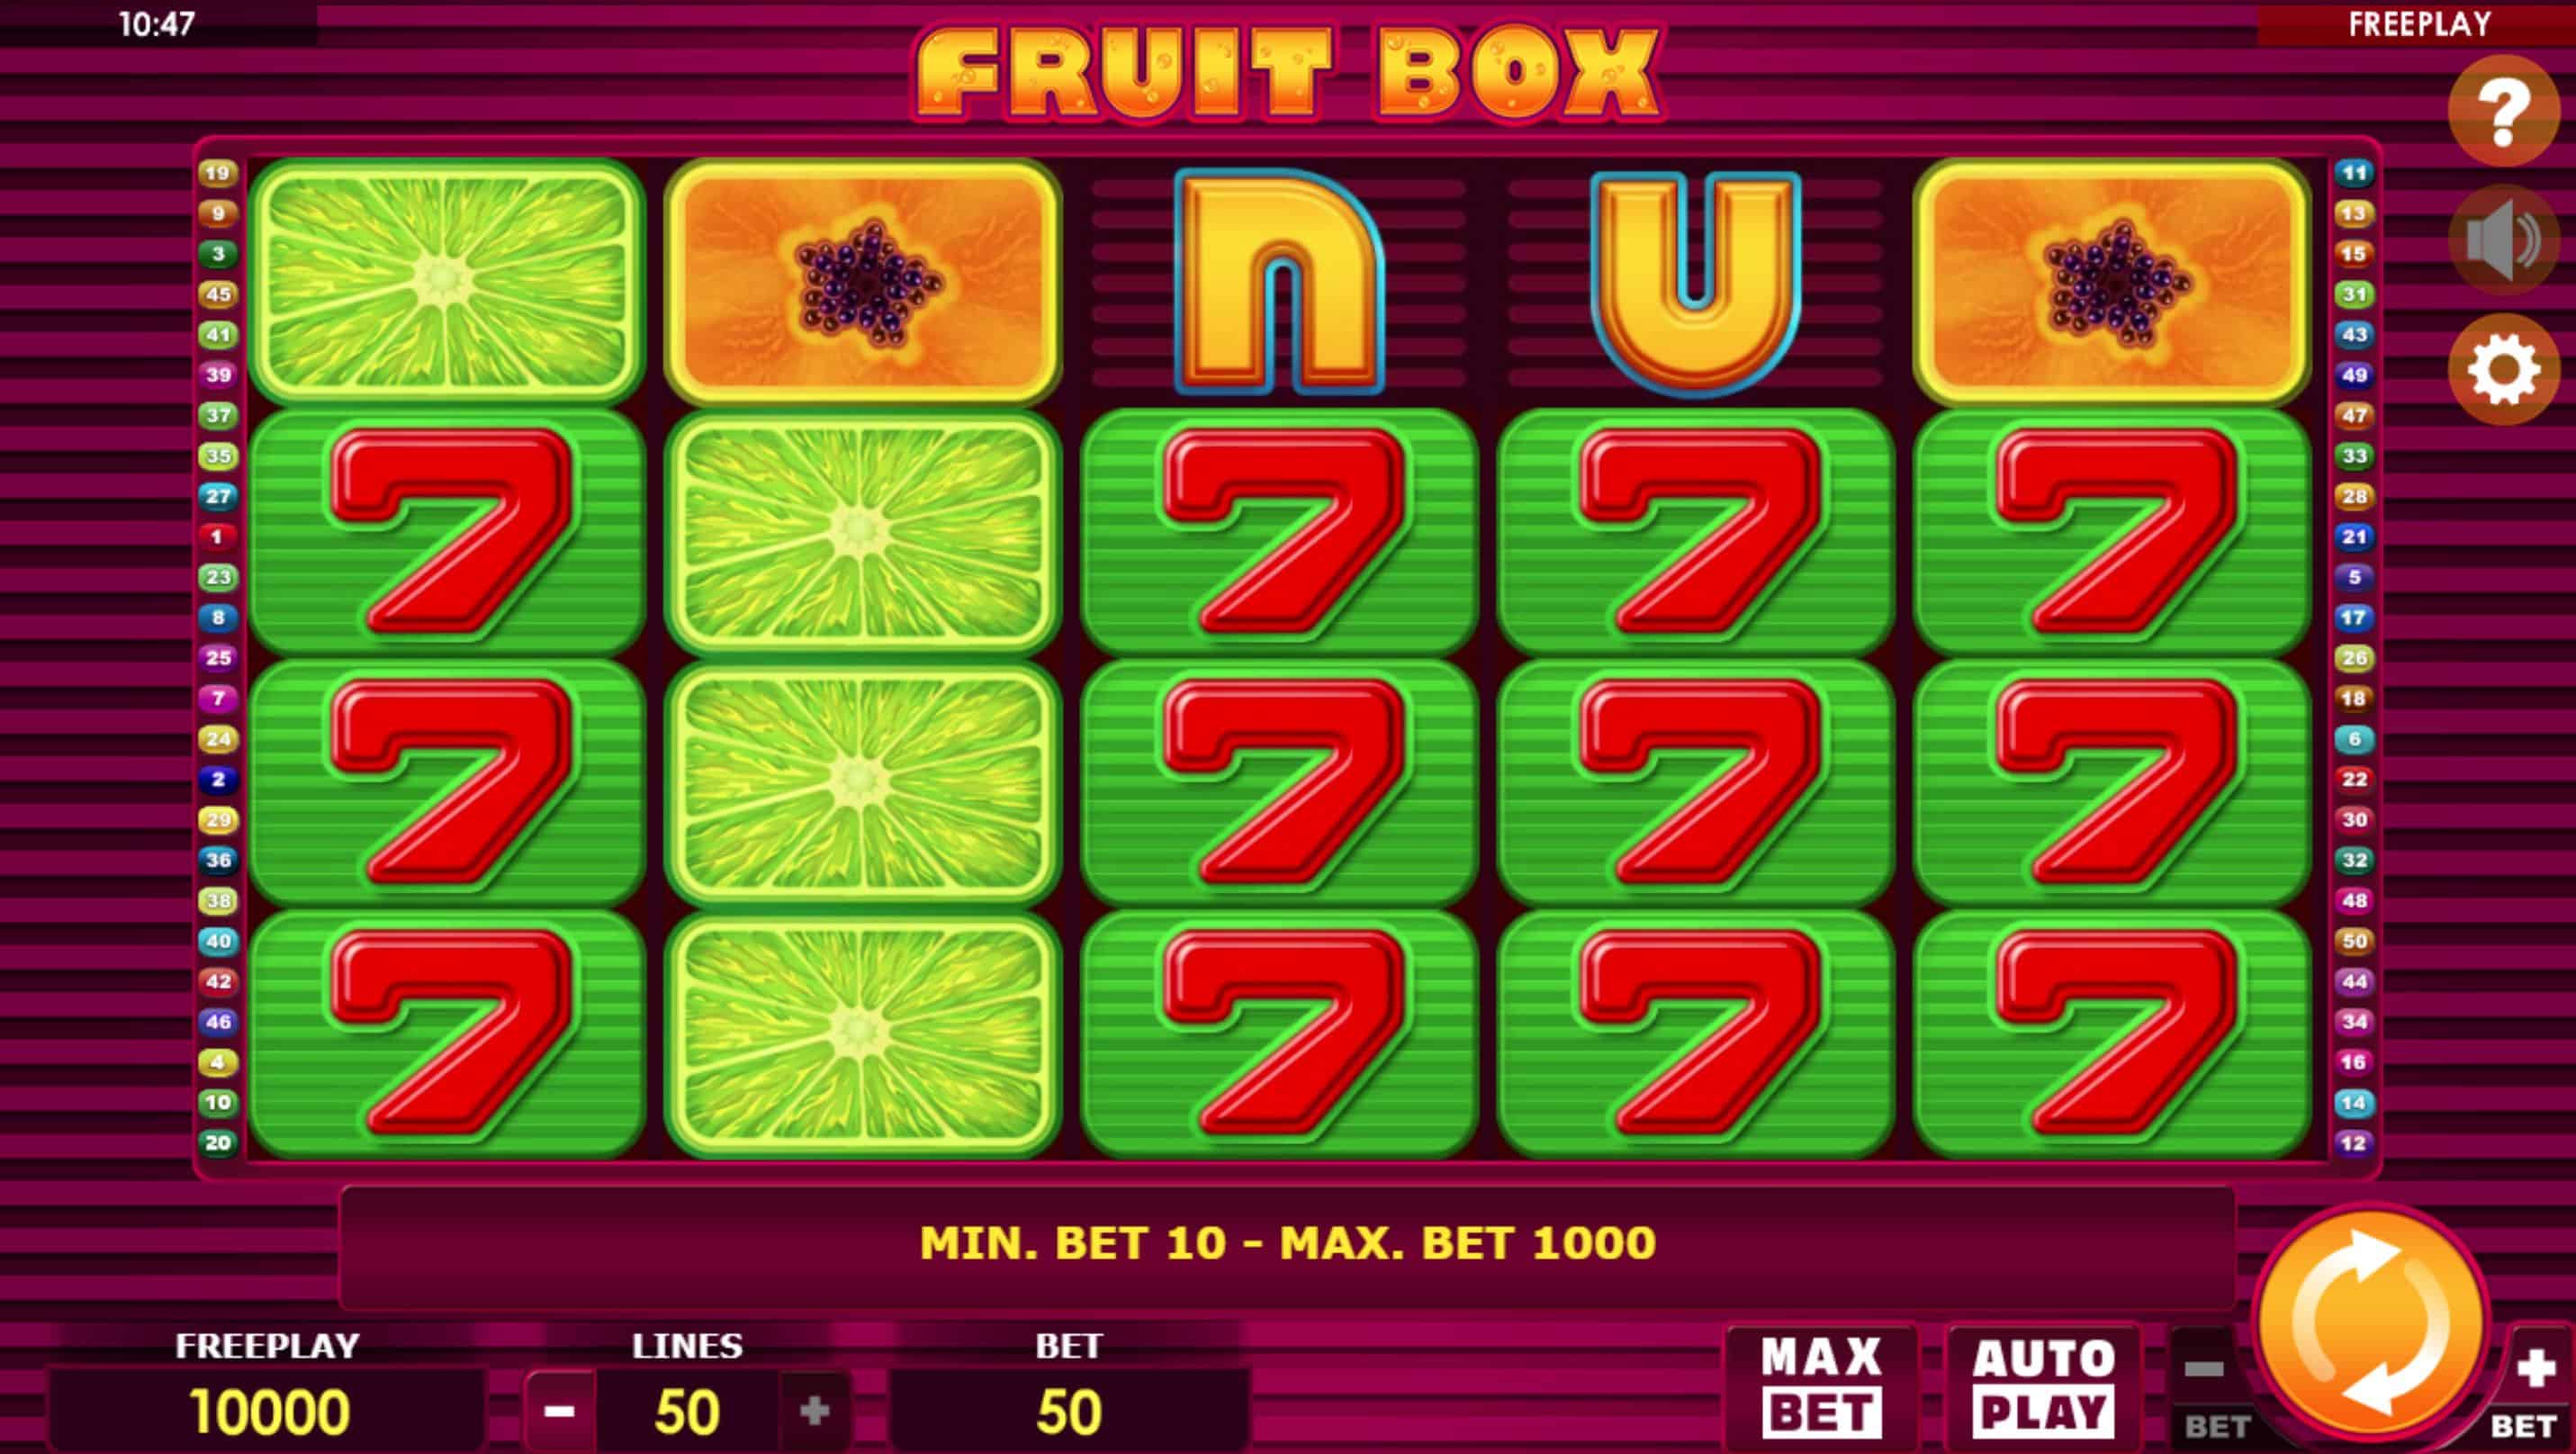 Fruit Box Slot Game Free Play at Casino Ireland 01